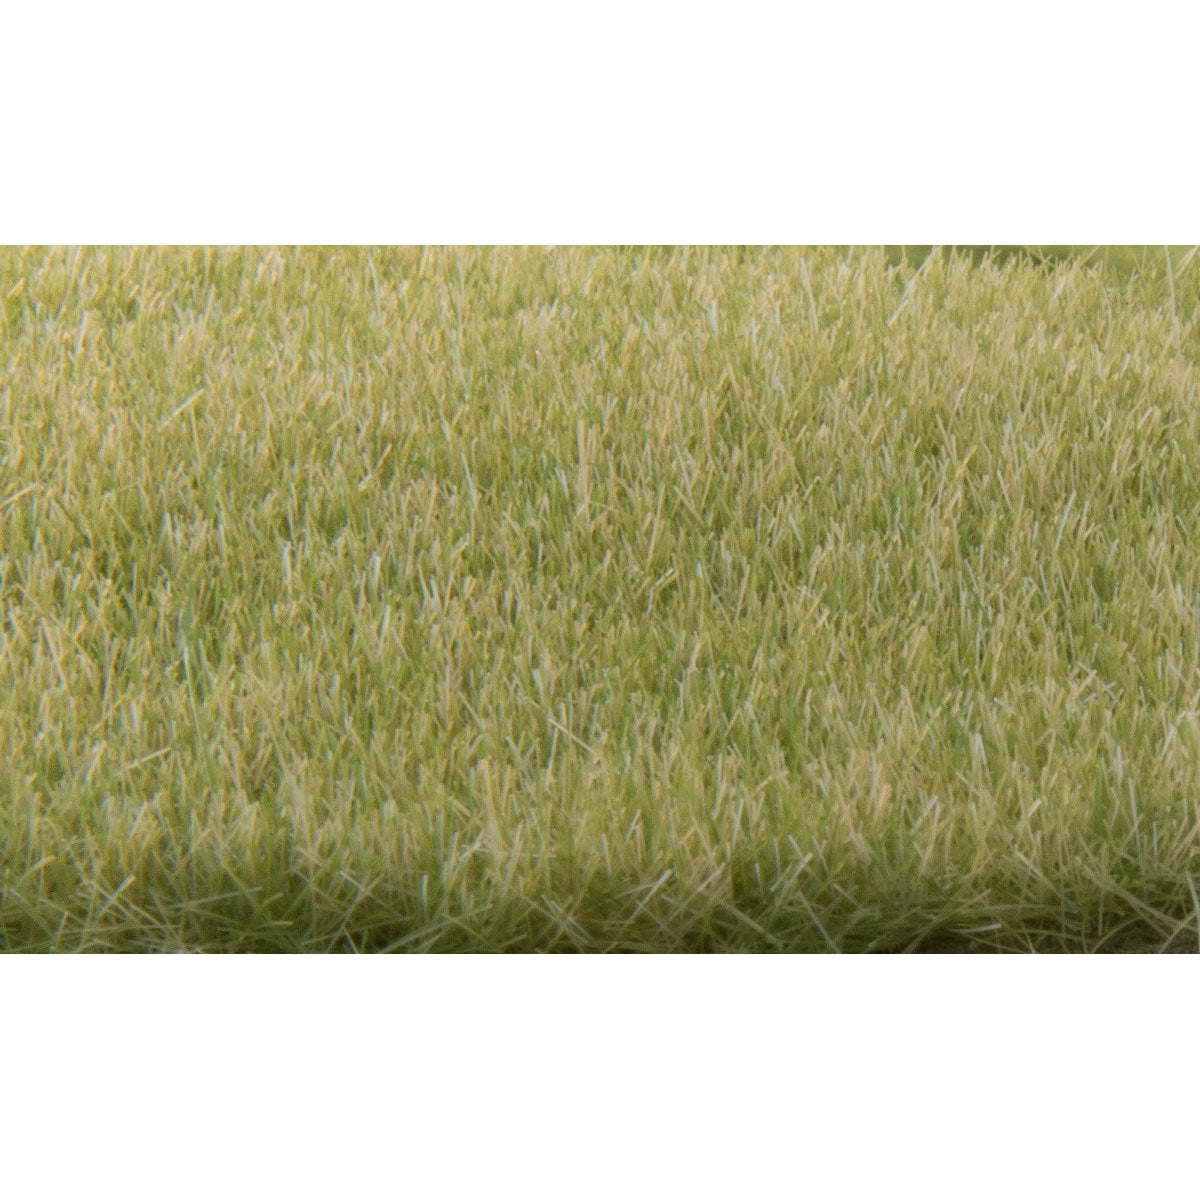 Woodland Scenics Static Grass Light Green 4mm